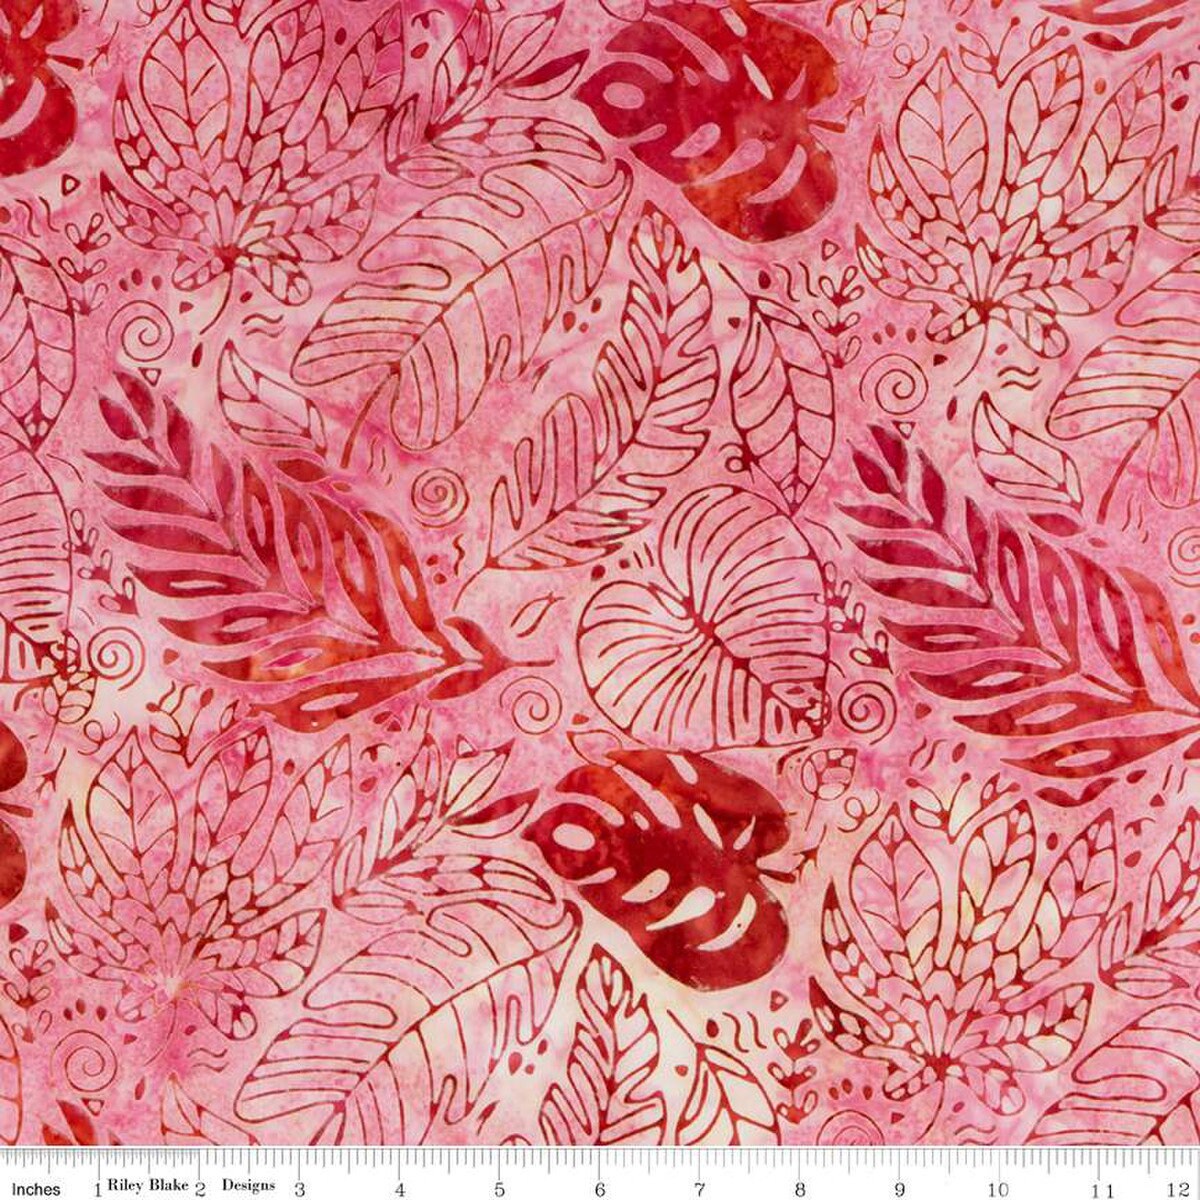 Expressions Batiks Tjaps Peppermint Batik Fabric - Riley Blake Designs BTPT1108, Red Pink Batik Fabric, Dark Pink Batik Fabric By the Yard